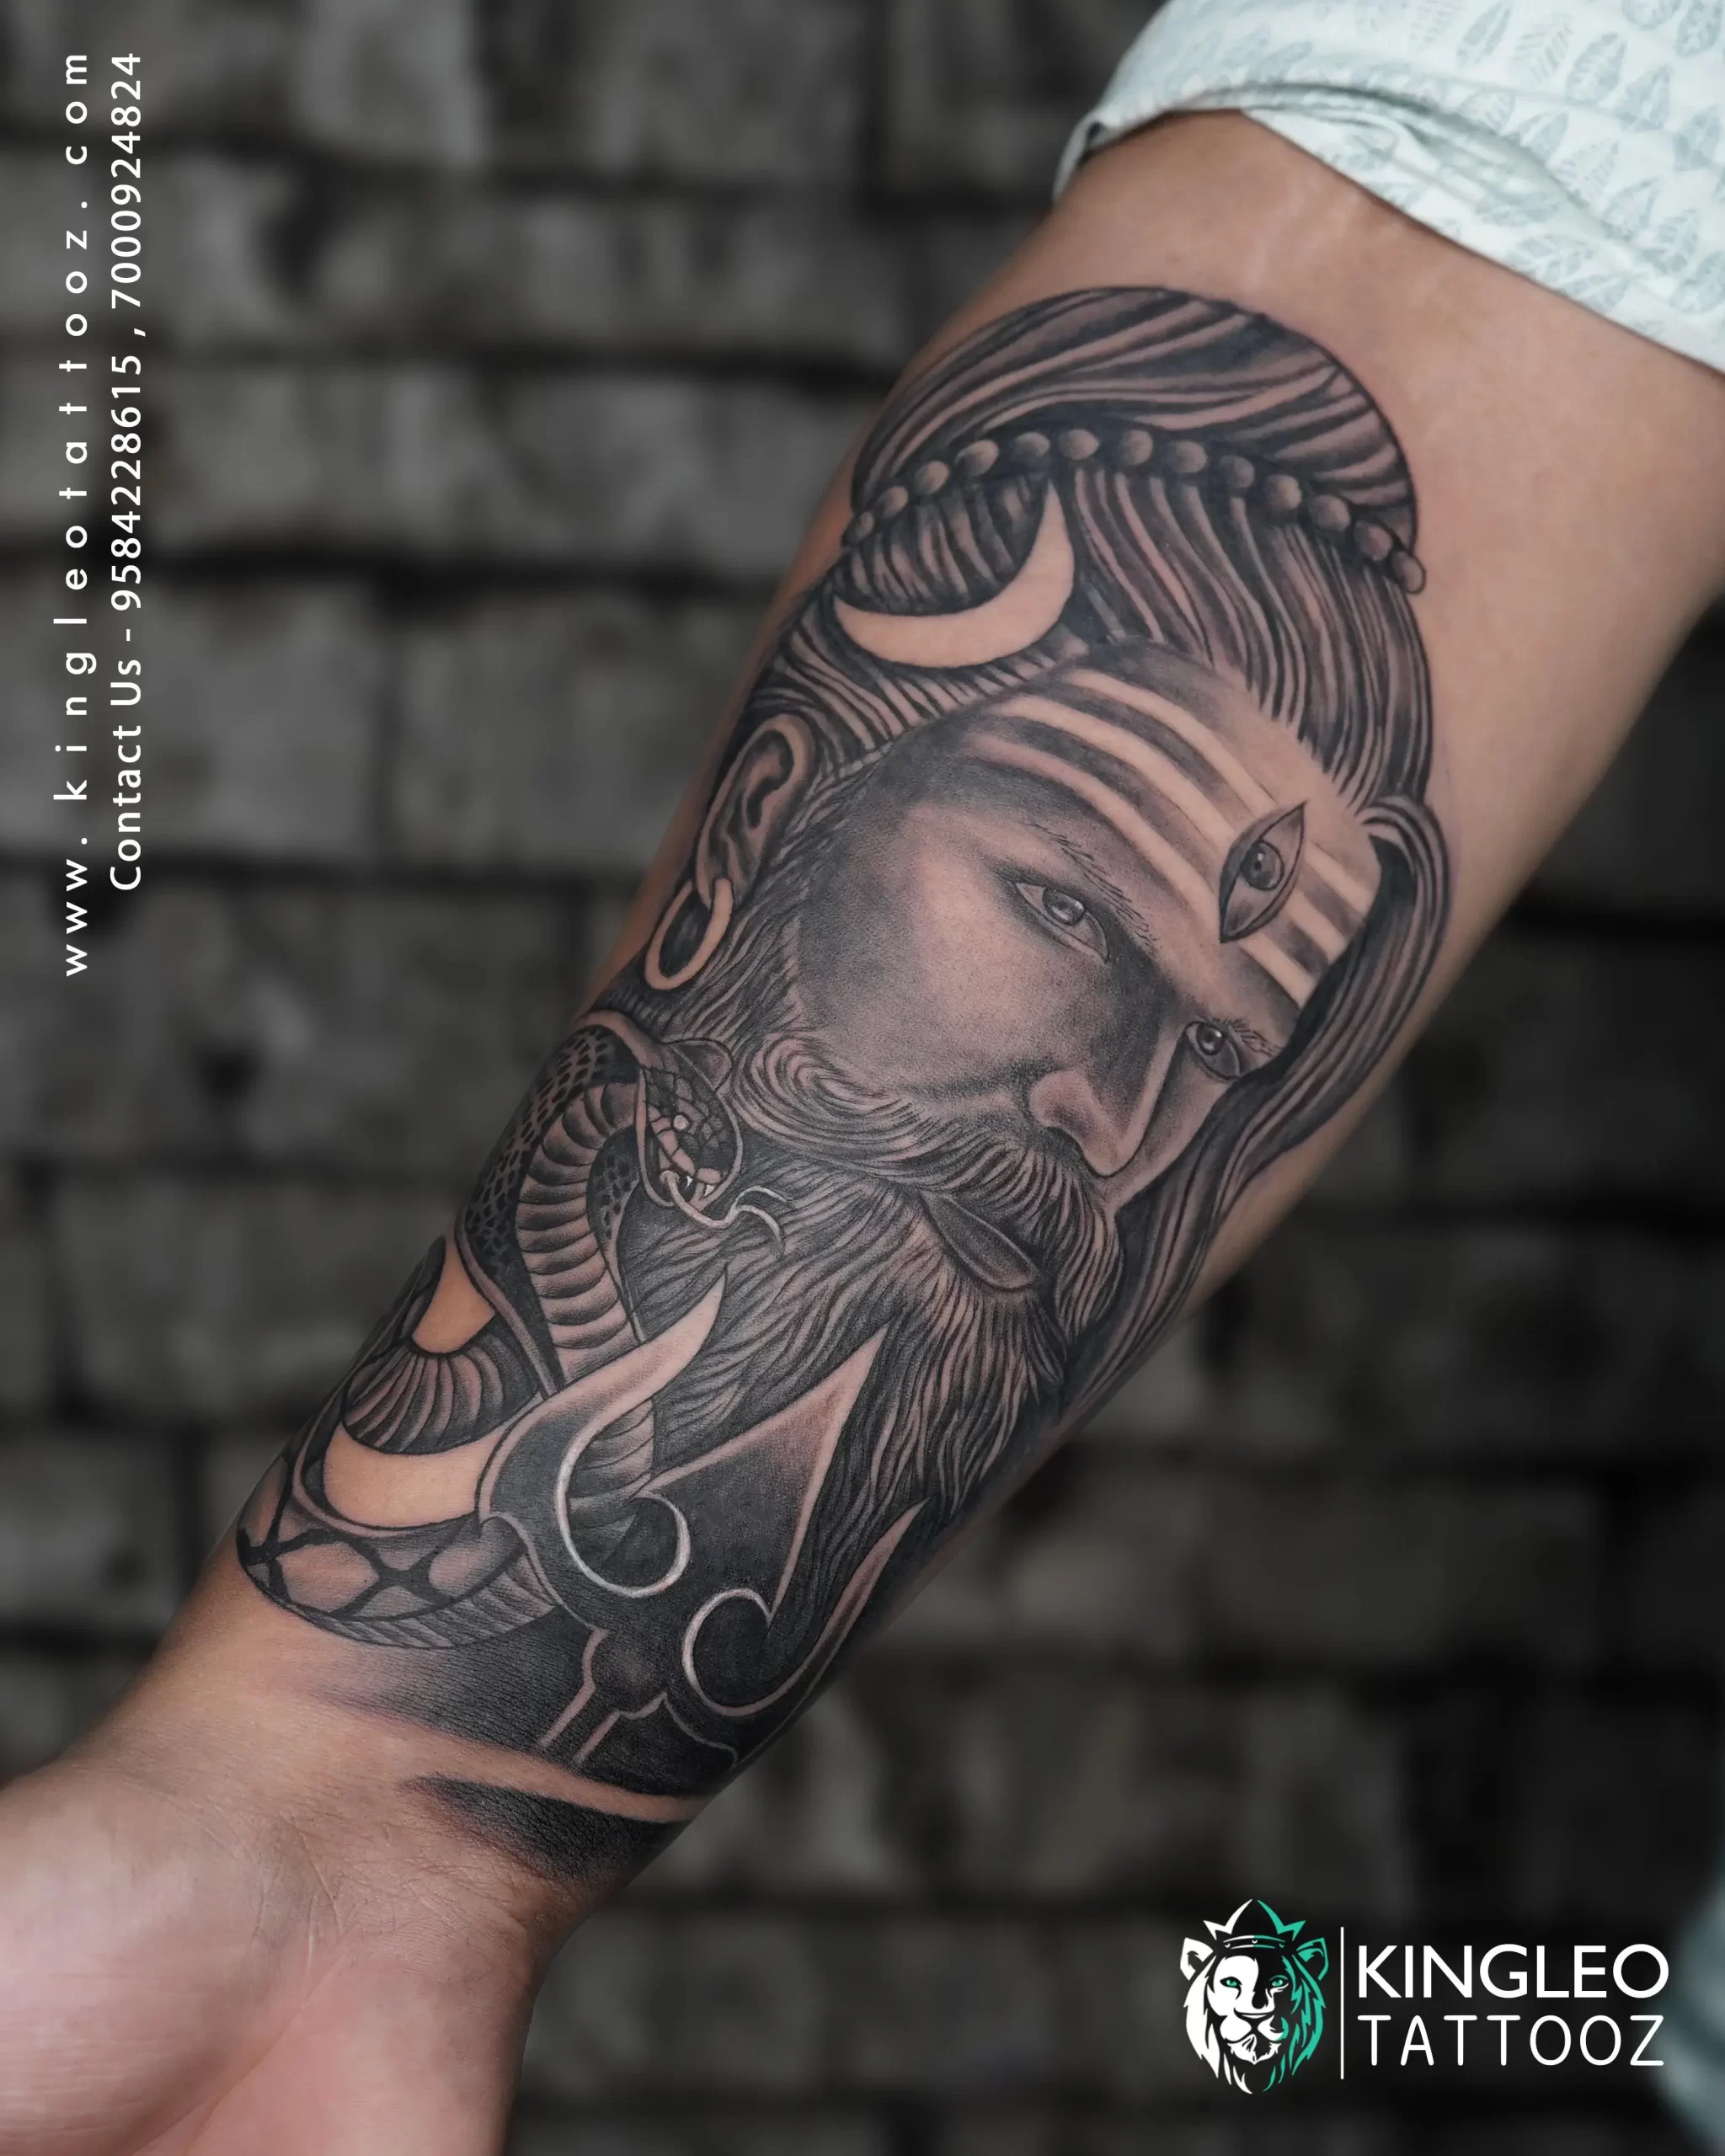 Rink Stop Tattoo Studio in Bavdhan,Pune - Best Temporary Tattoo Artists in  Pune - Justdial